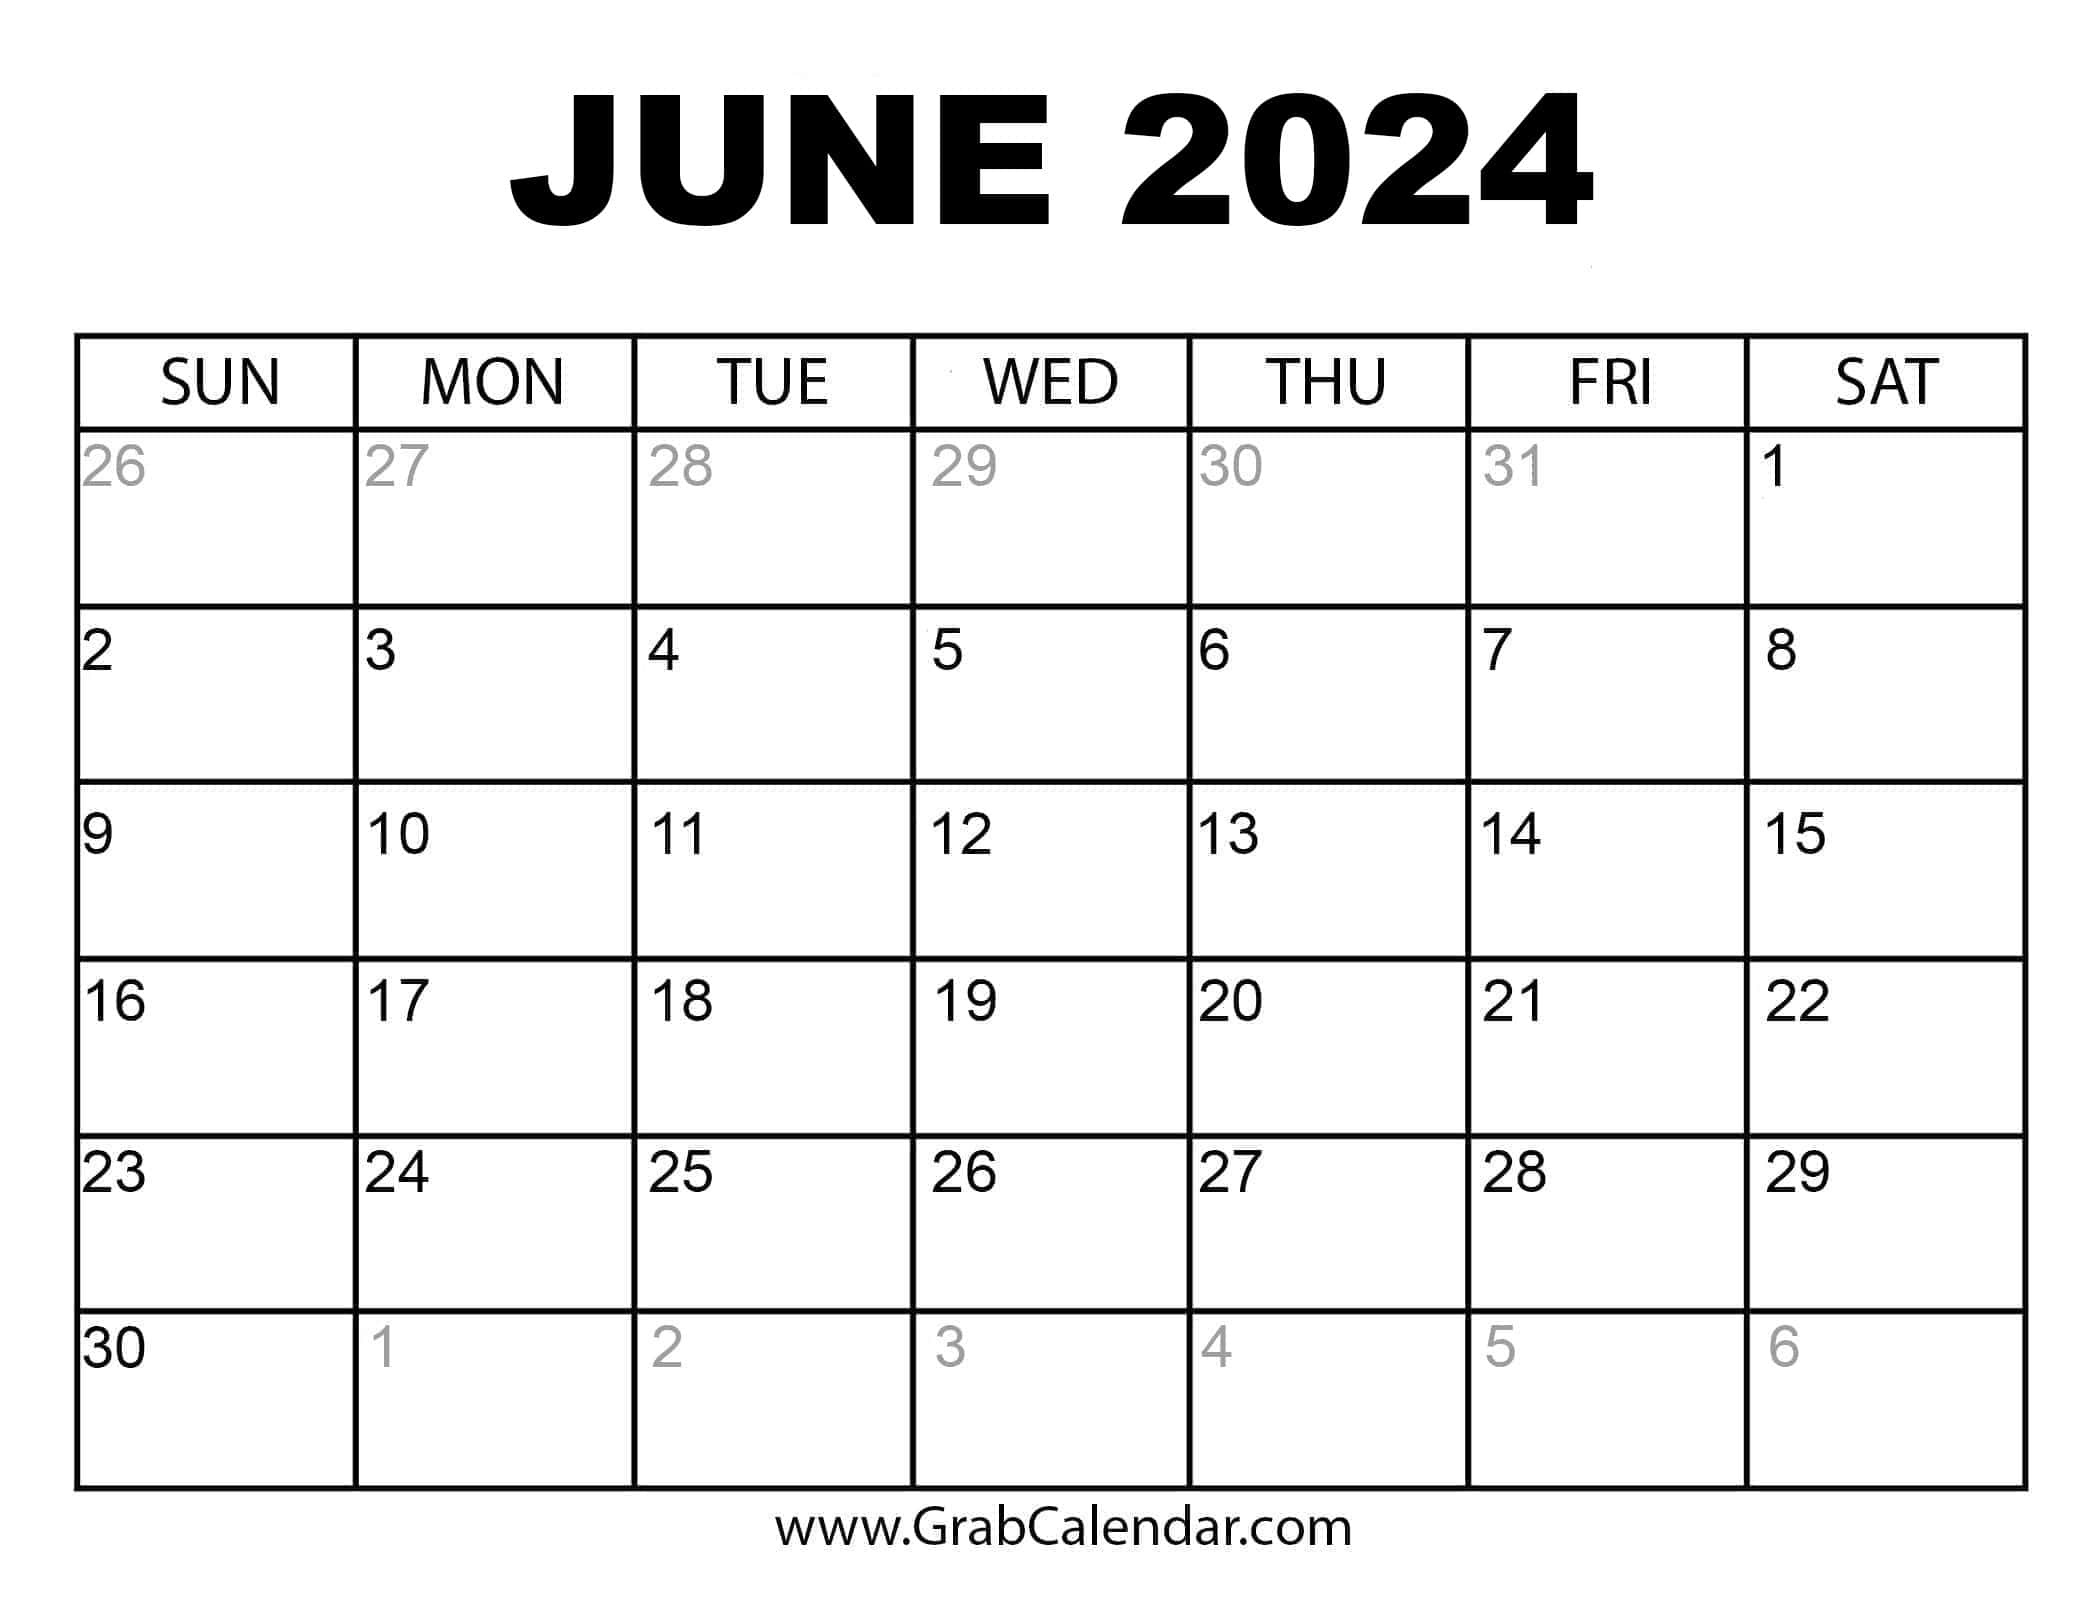 Printable June 2024 Calendar intended for The Calendar For The Month Of June 2024